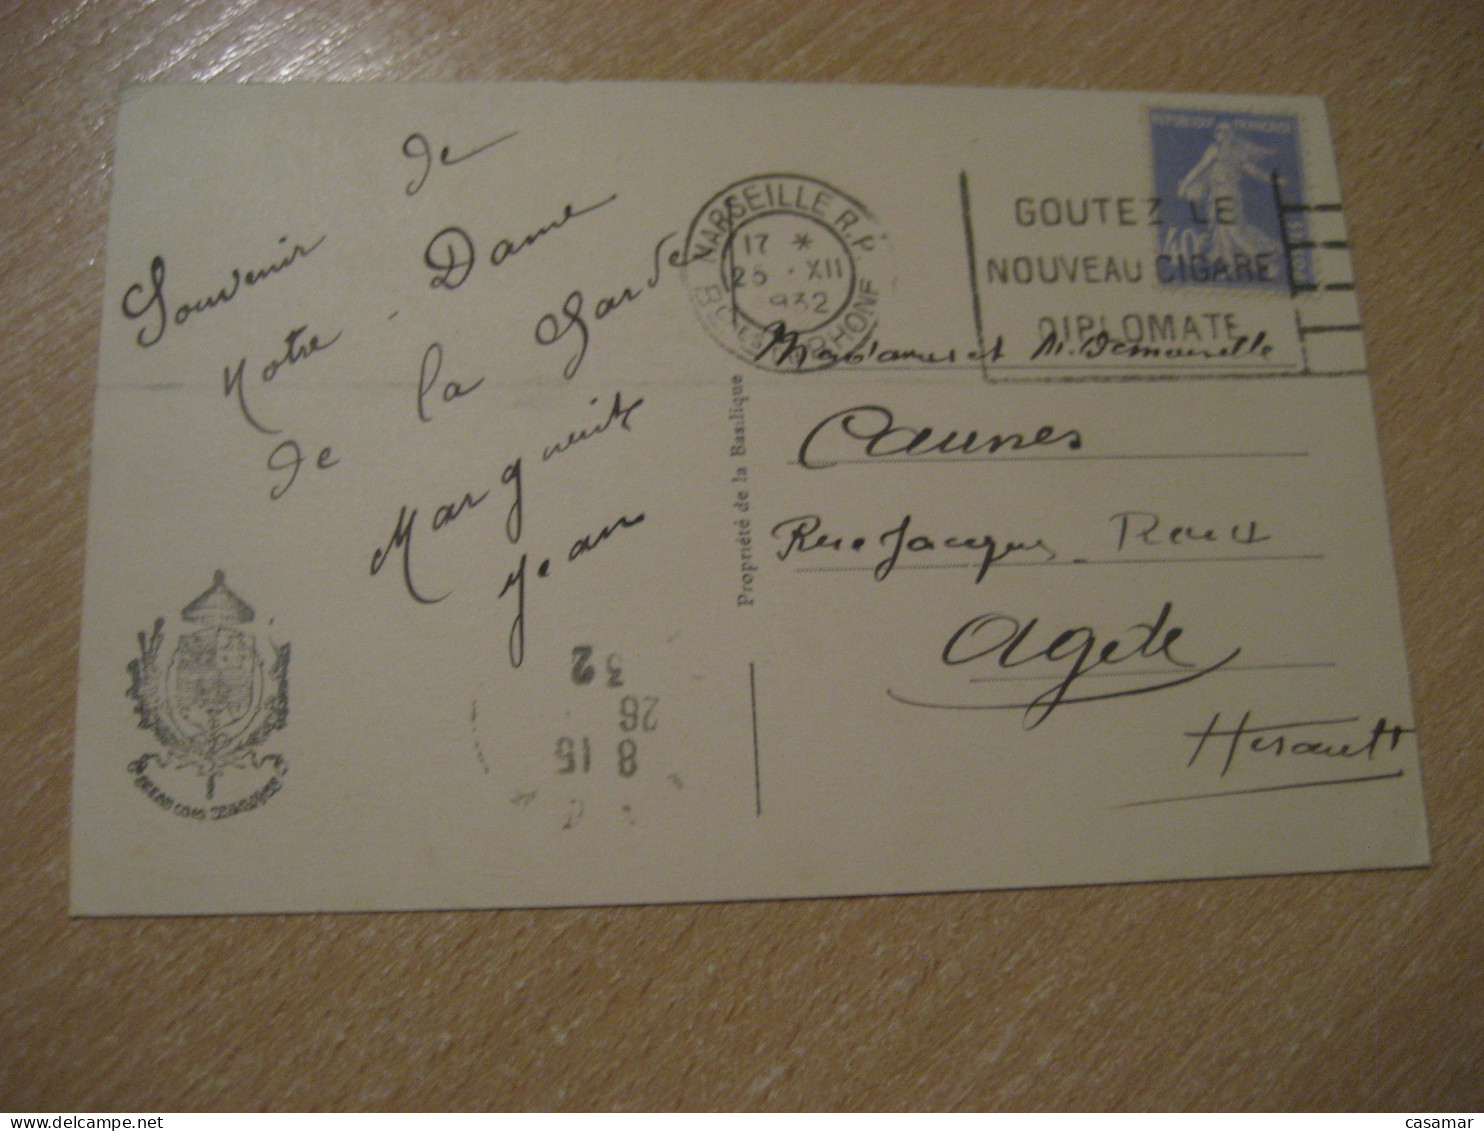 MARSEILLE 1932 To Agde Cigare Diplomade Tobacco Cancel N.D. De La Garde Postcard FRANCE - Tobacco